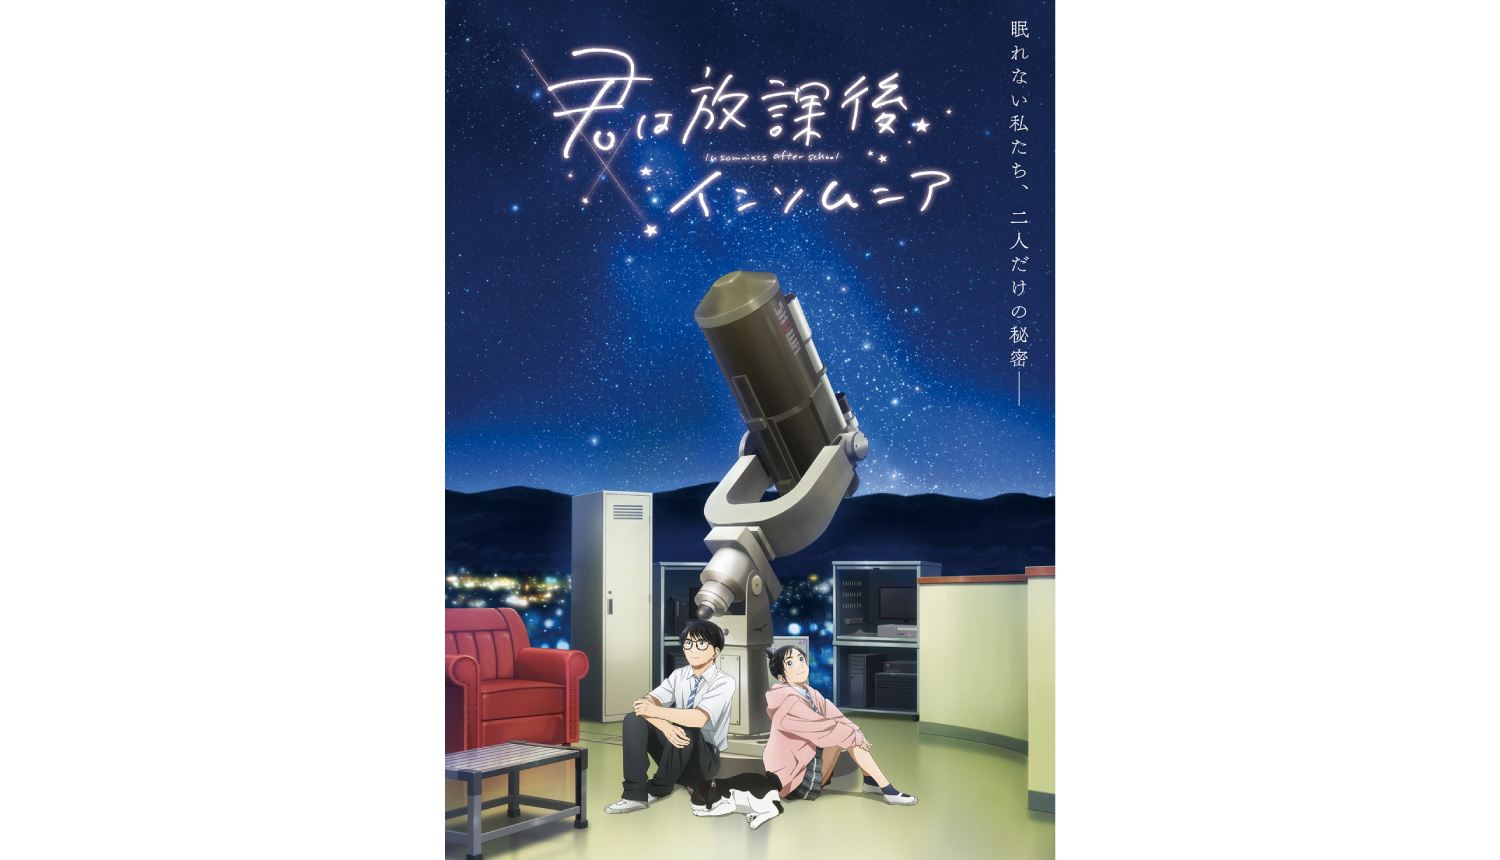 Makoto Ojiro's Insomniacs After School Manga Gets TV Anime, Live